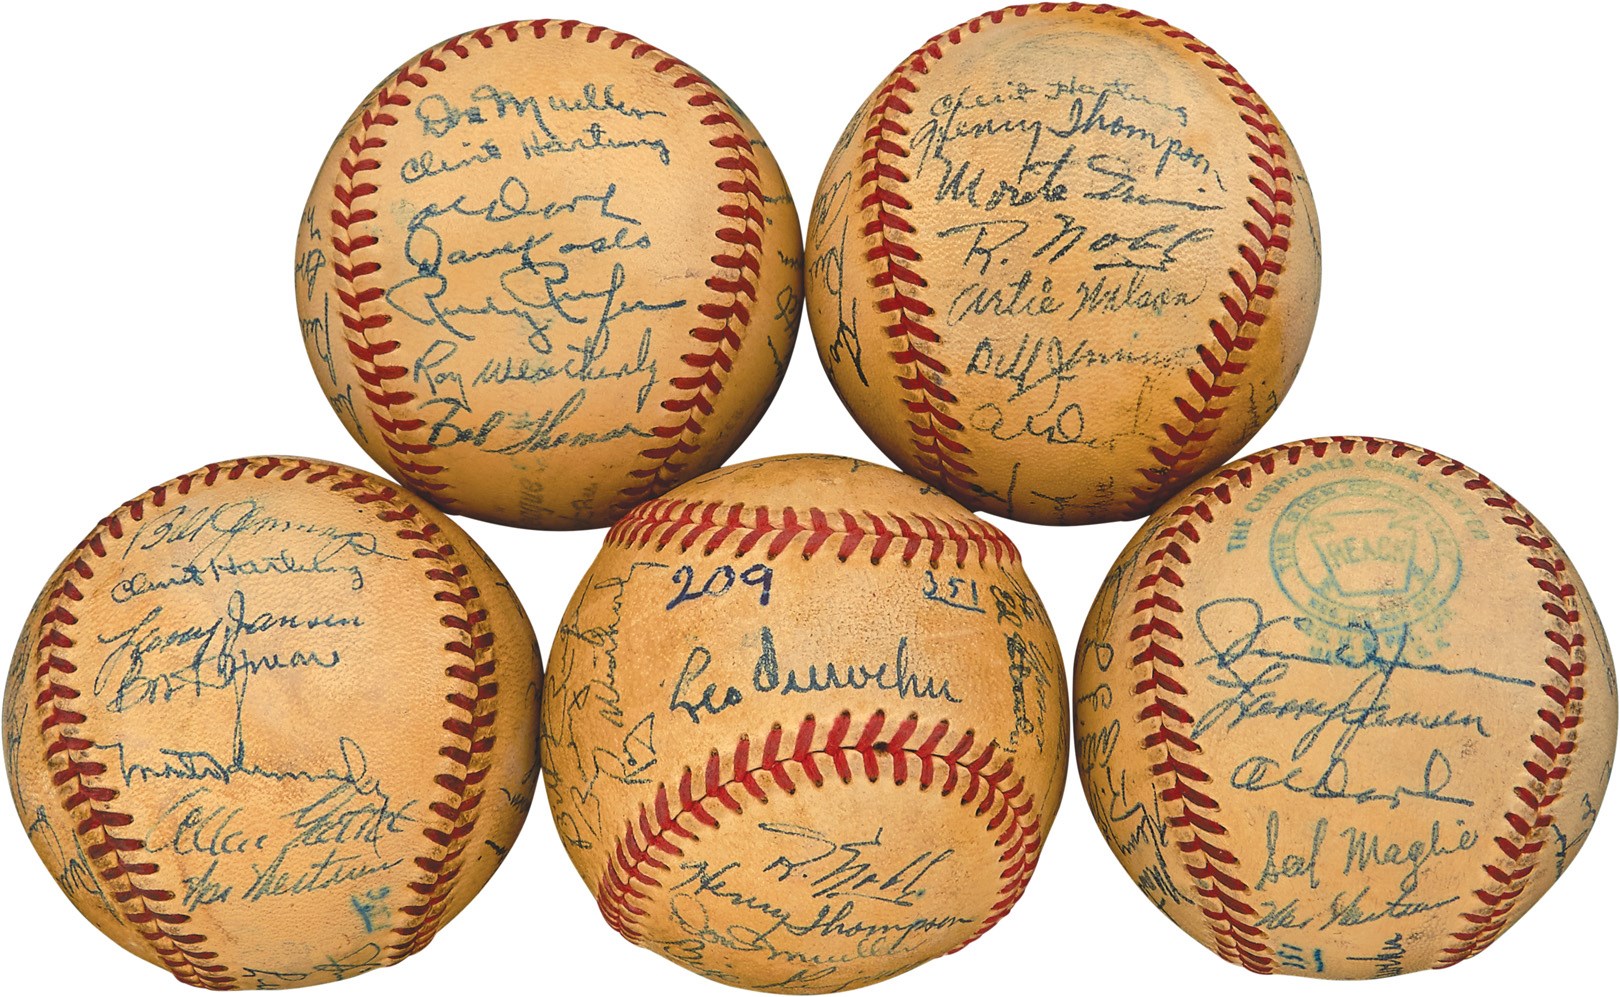 The John O'connor Signed Baseball Collection - 1951 National League Champion NY Giants Team-Signed Baseballs (5)